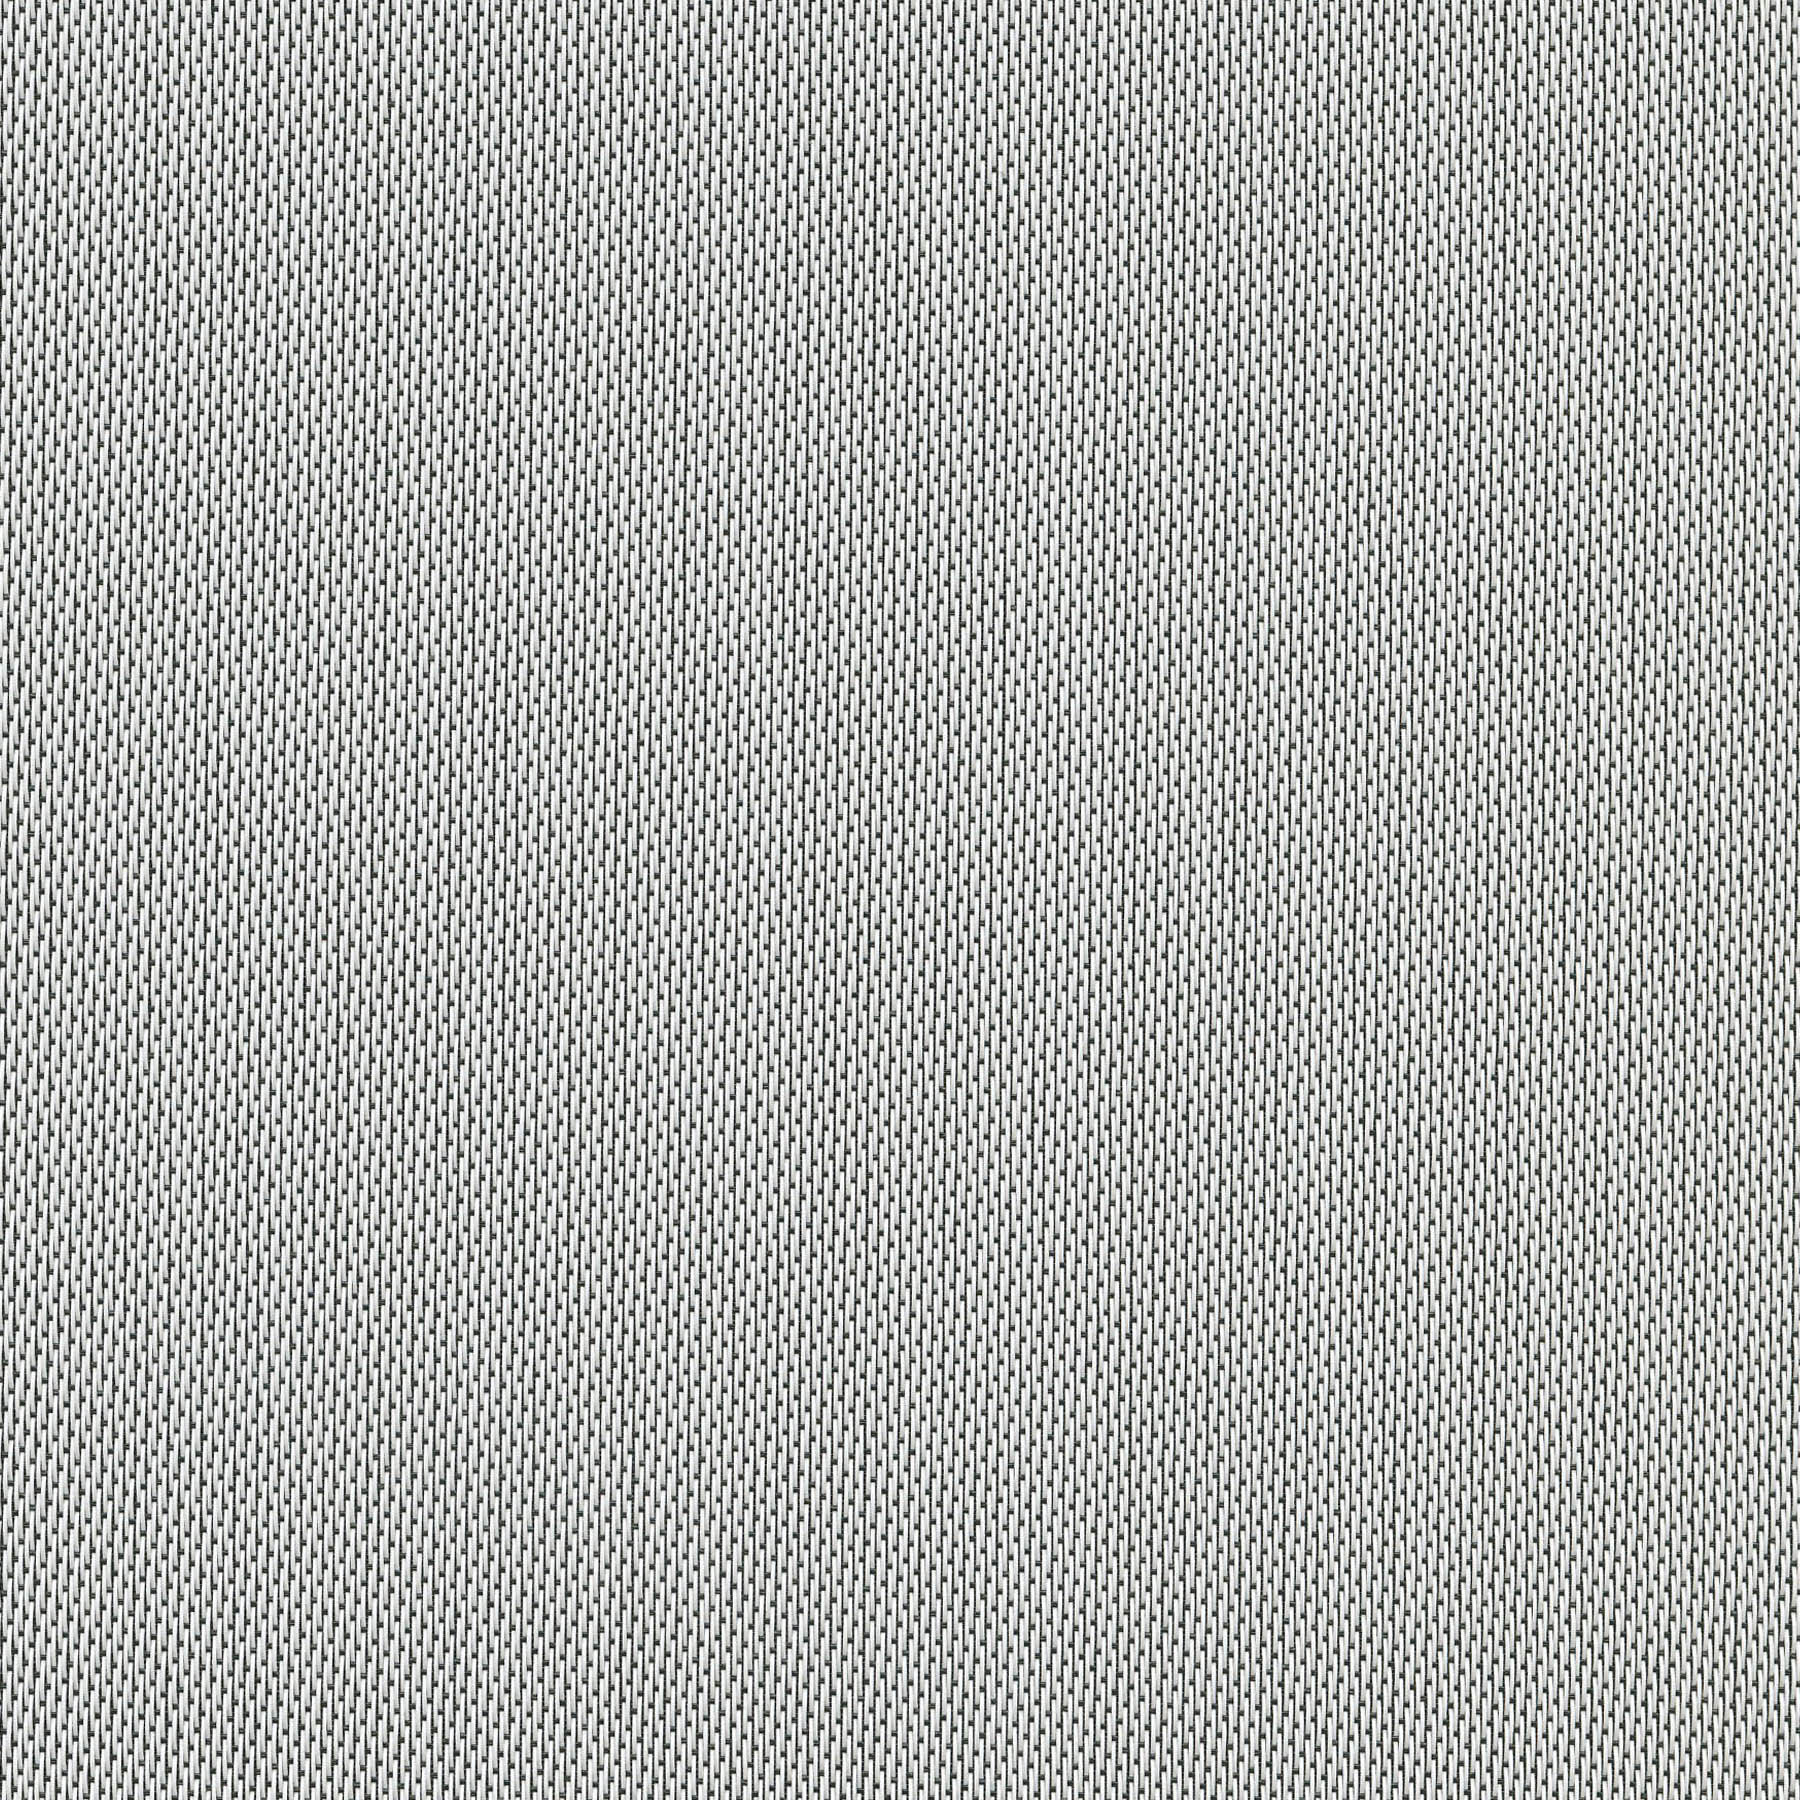 Altex - Fabric - SHEERWEAVE 2701 - Charcoal/White - 155